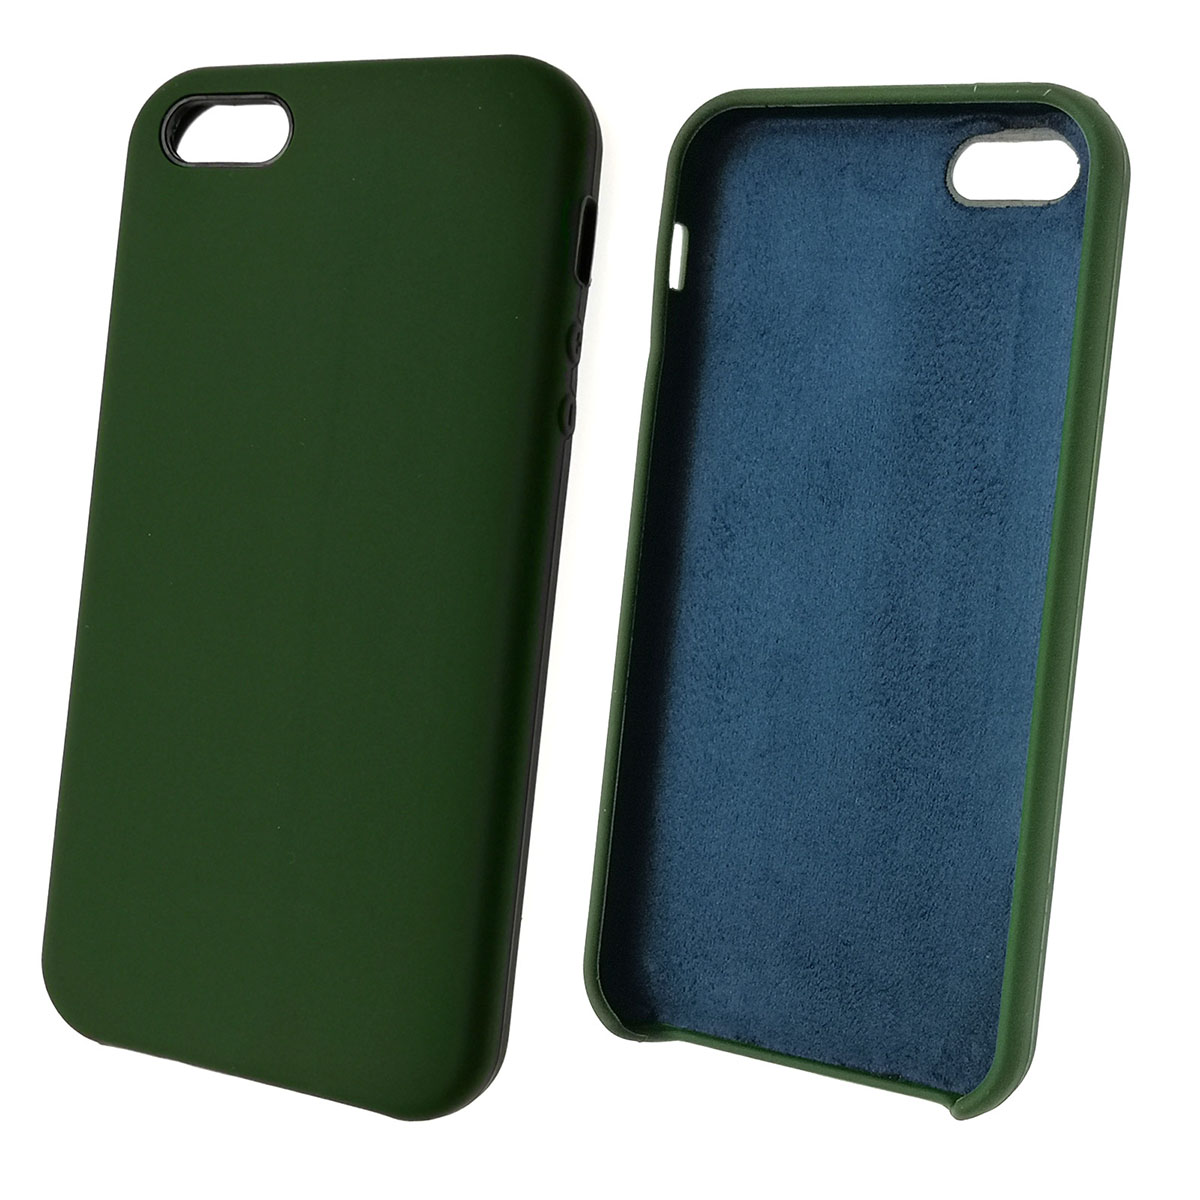 Чехол накладка Silicon Case для APPLE iPhone 5, 5S, SE, силикон, бархат, цвет болотный